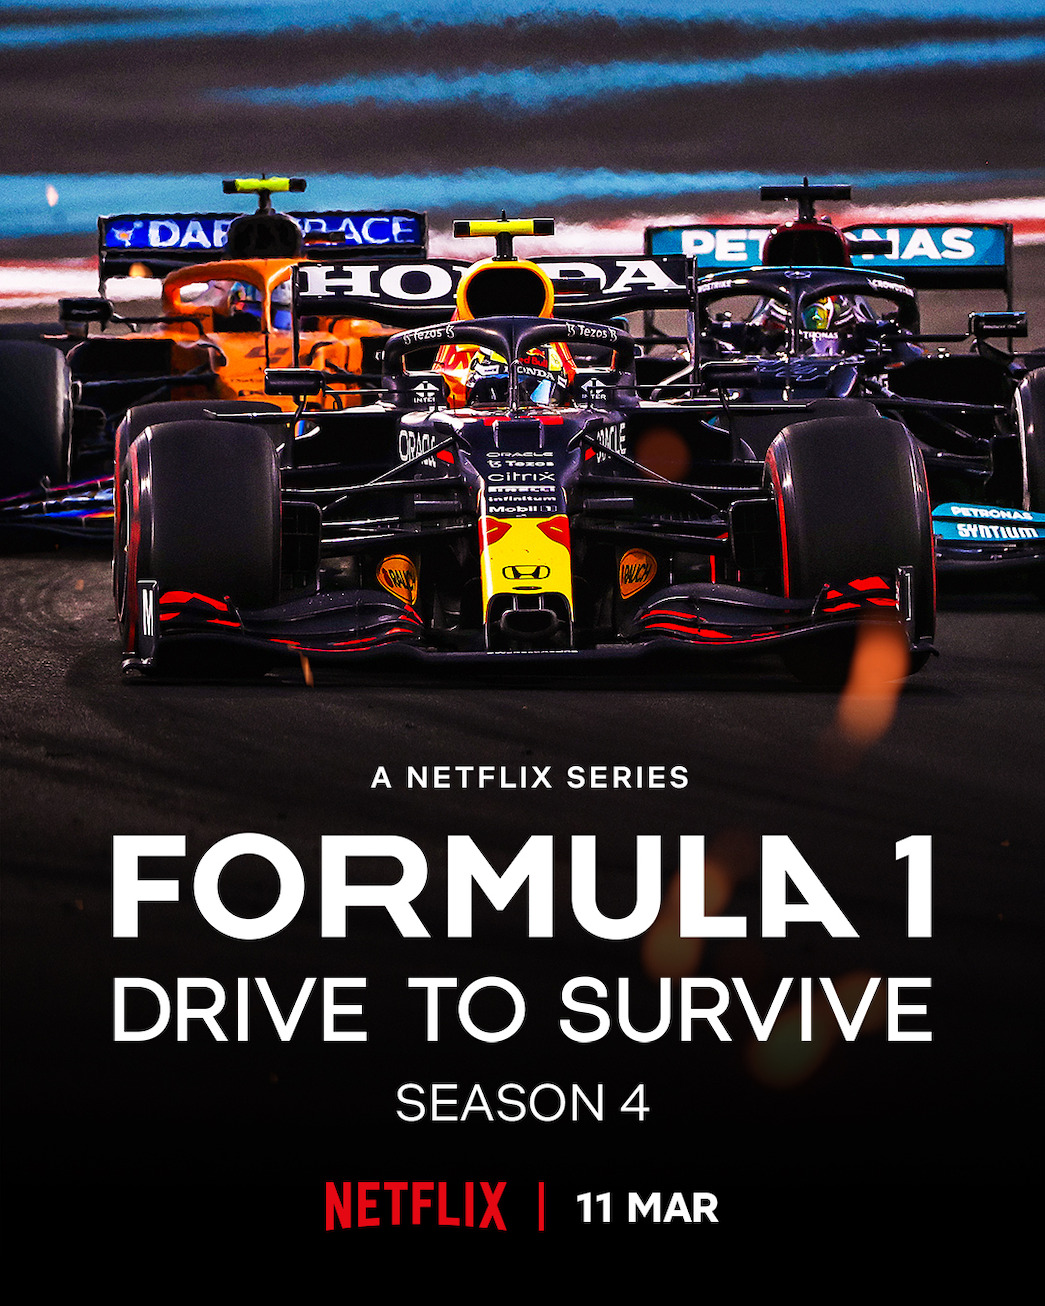 [TV] Formula 1 Drive to Survive Season 4 (Netflix)